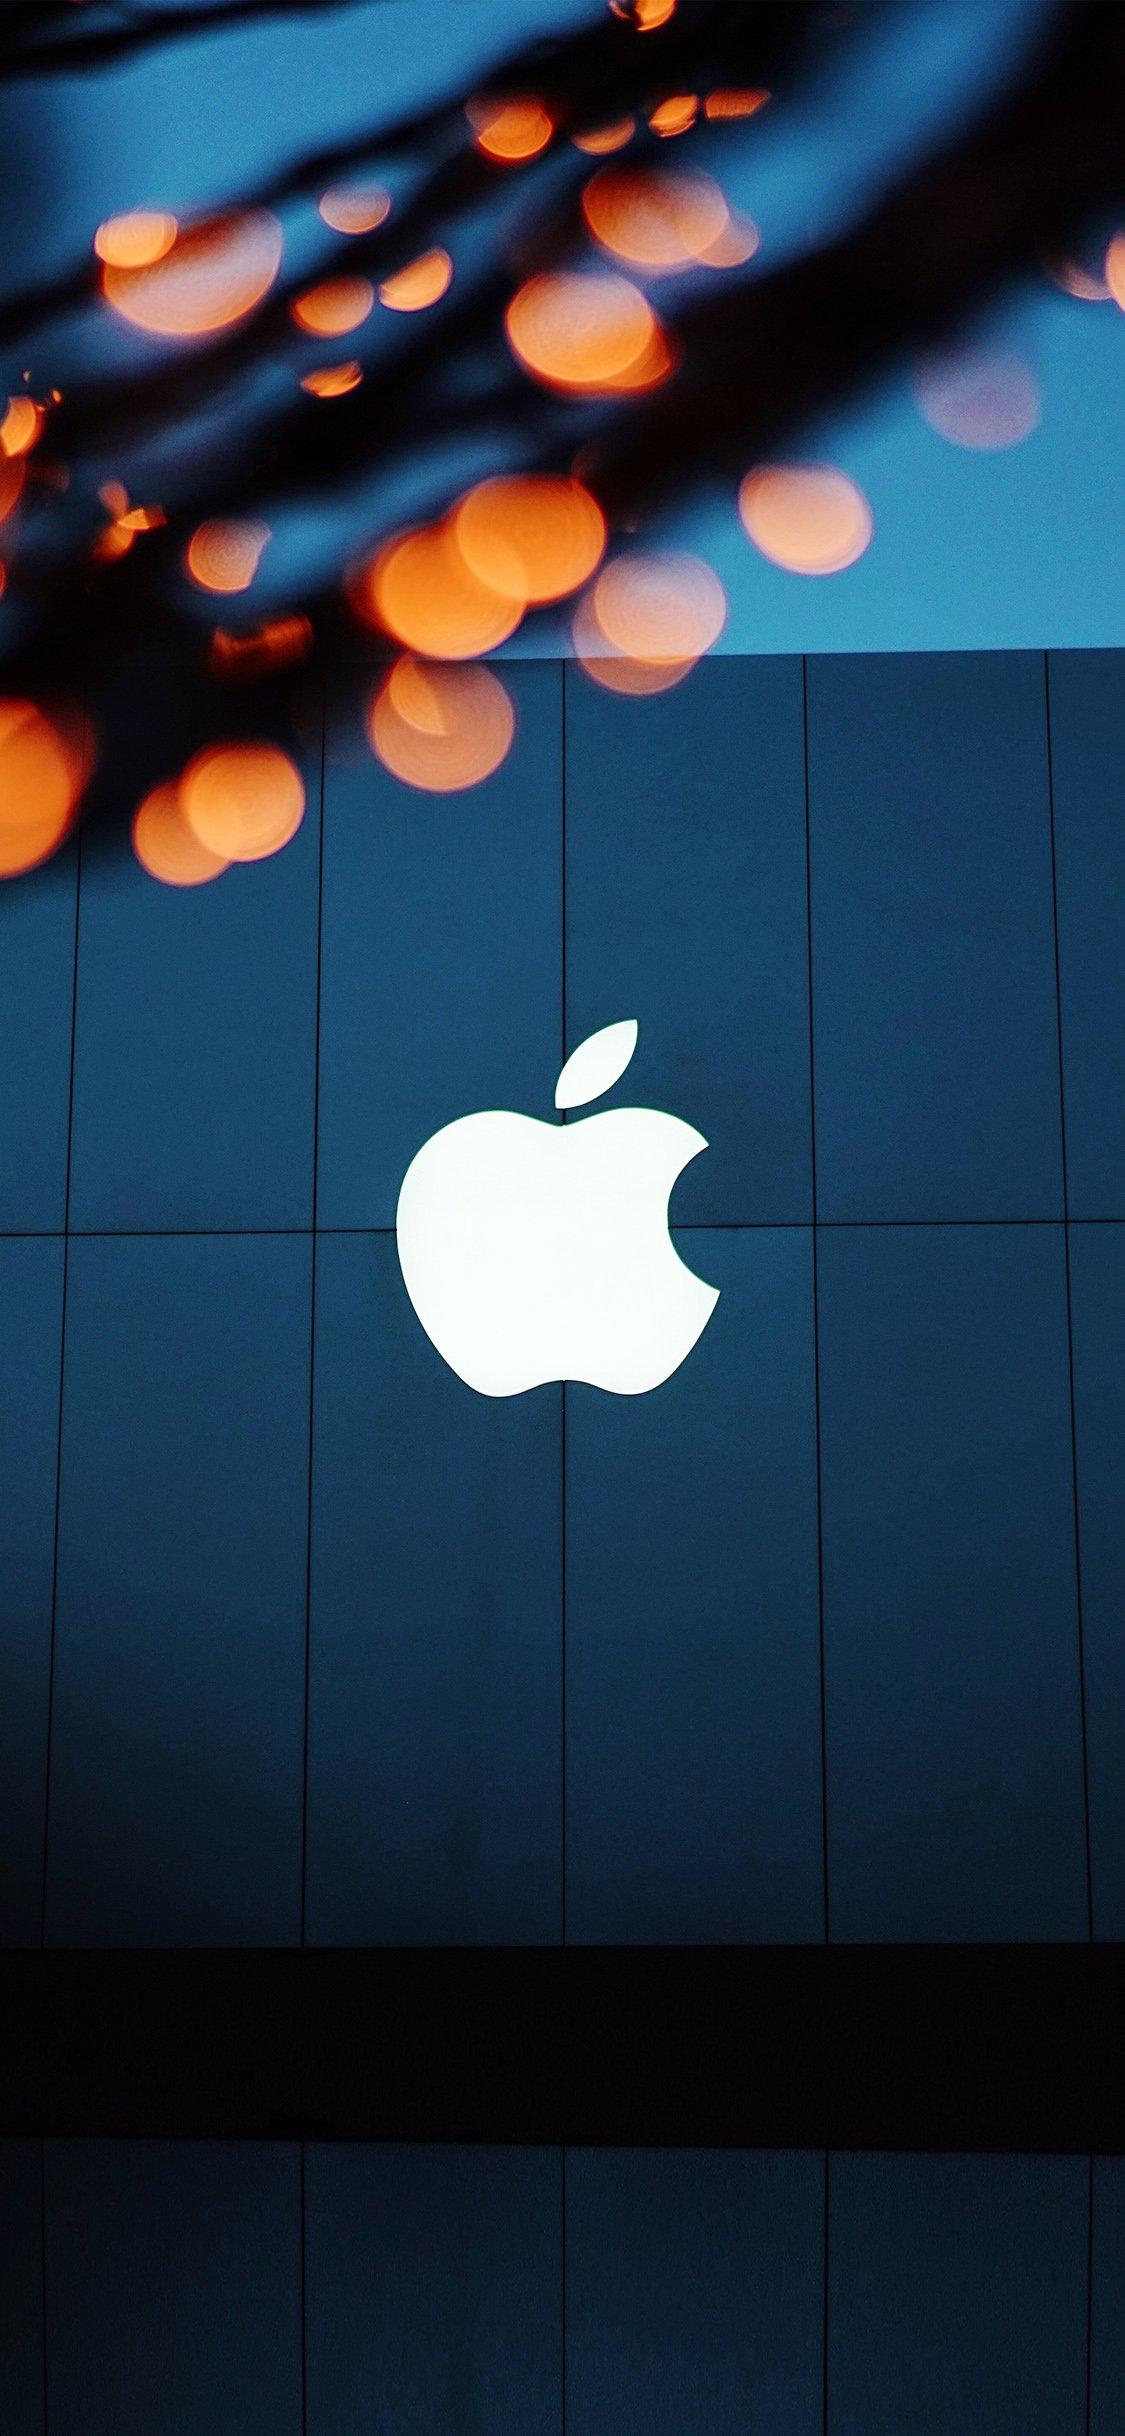 iPhone X wallpaper. apple logo blue orange dark